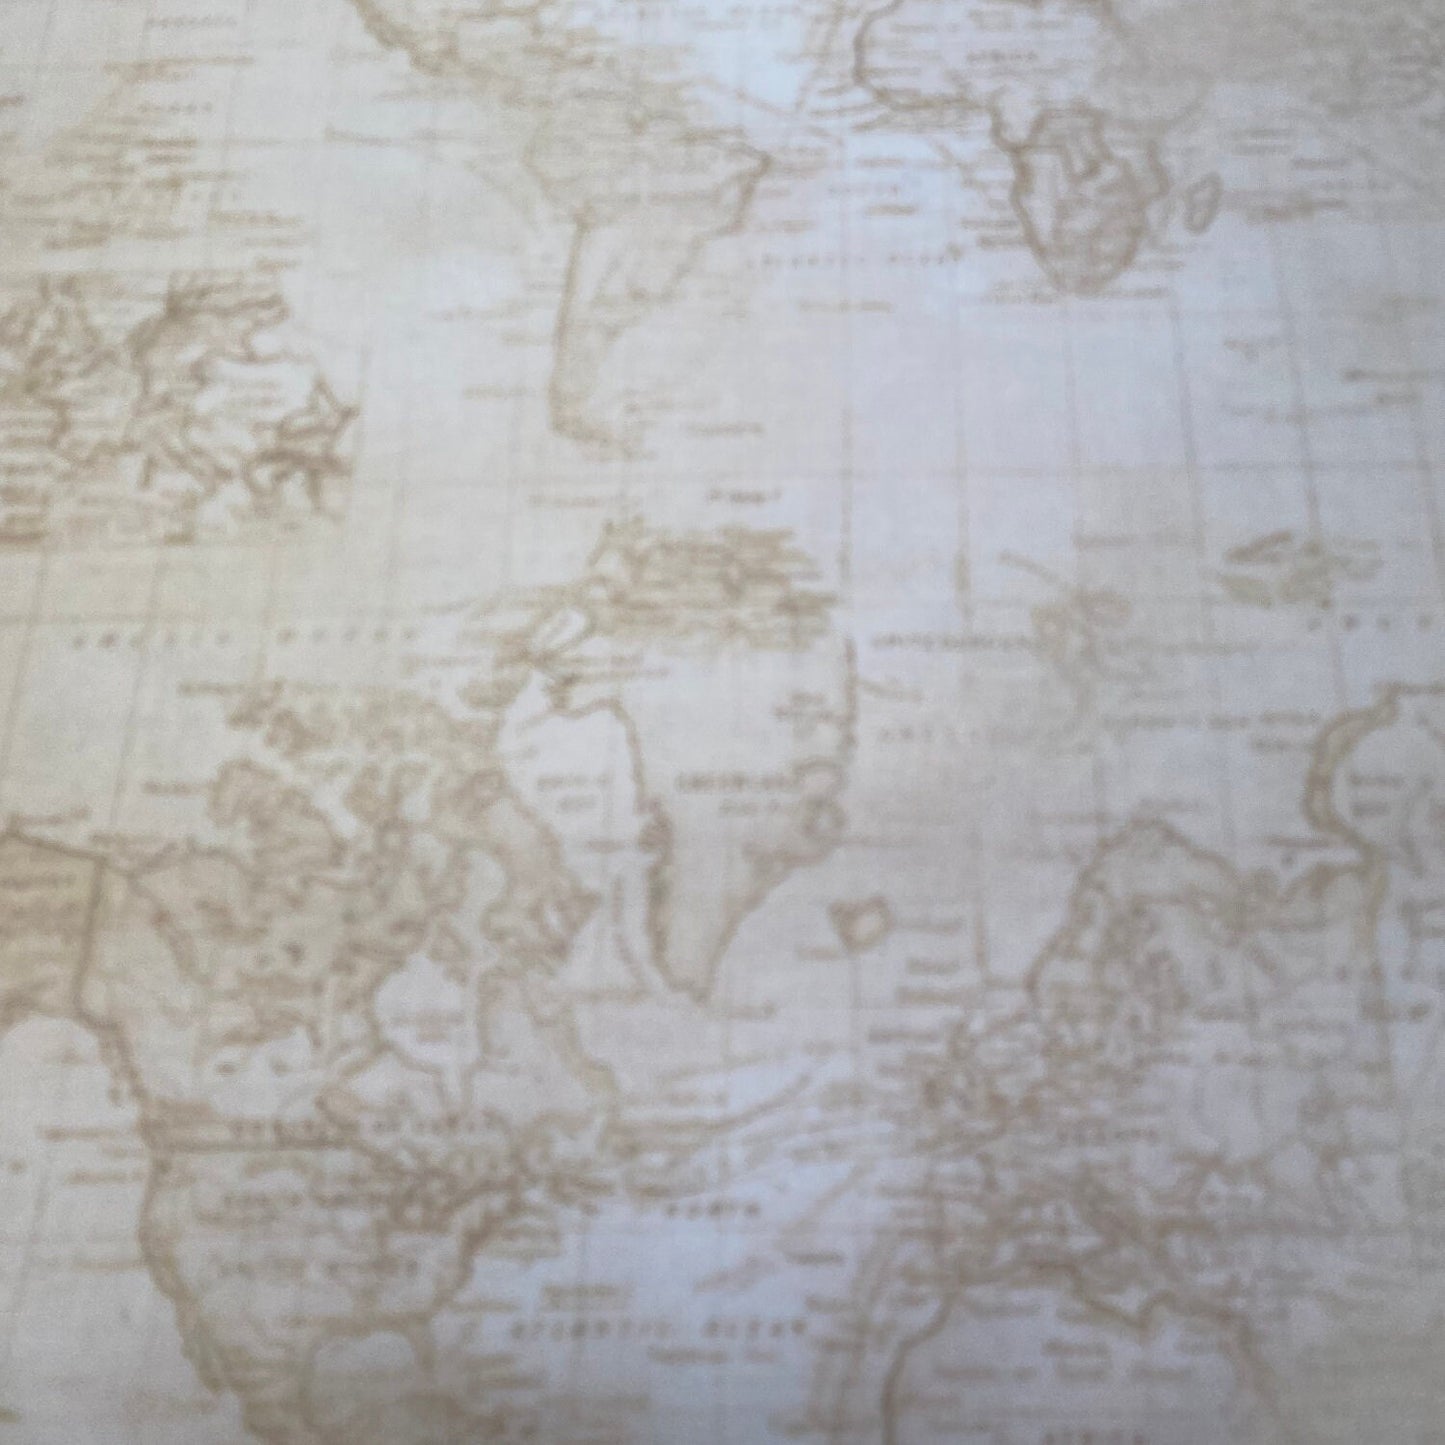 Michael Miller Sea Navigation Landkarte Welt Geografisch Weltkarte